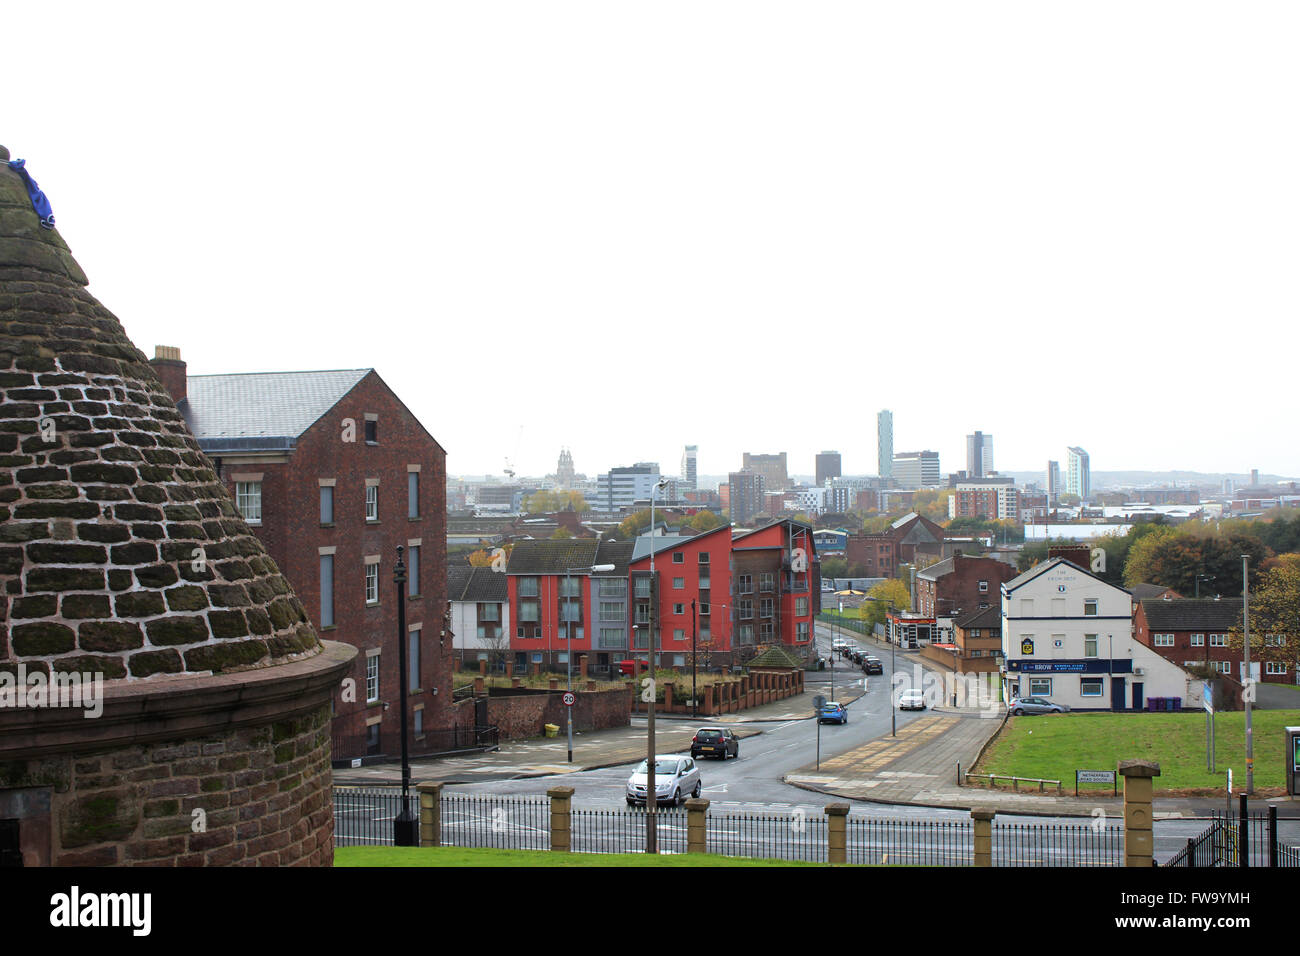 Prince Rupert's Tower - Everton Lock up mirando sobre el Liverpool Foto de stock